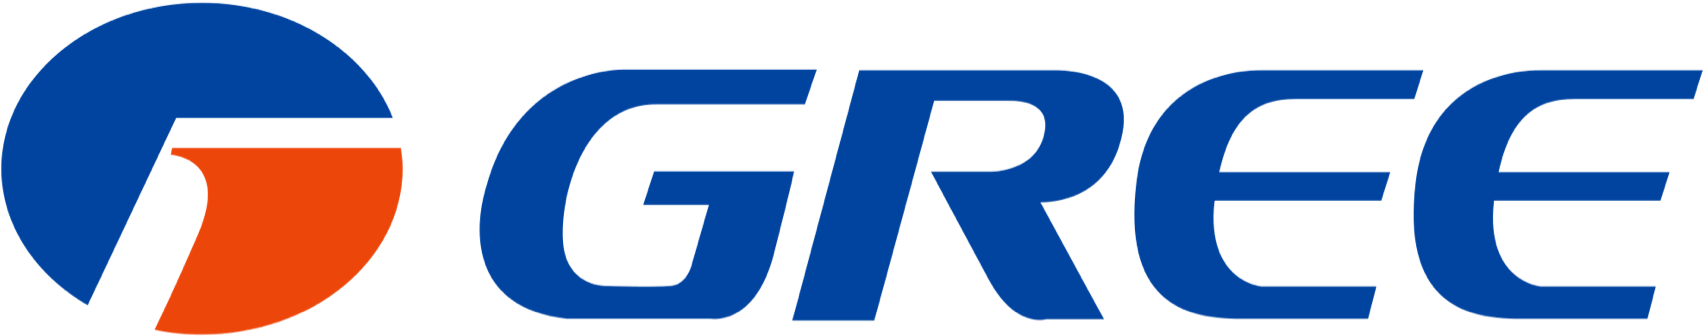 Gree Air Conditioner Logo (1770x350)